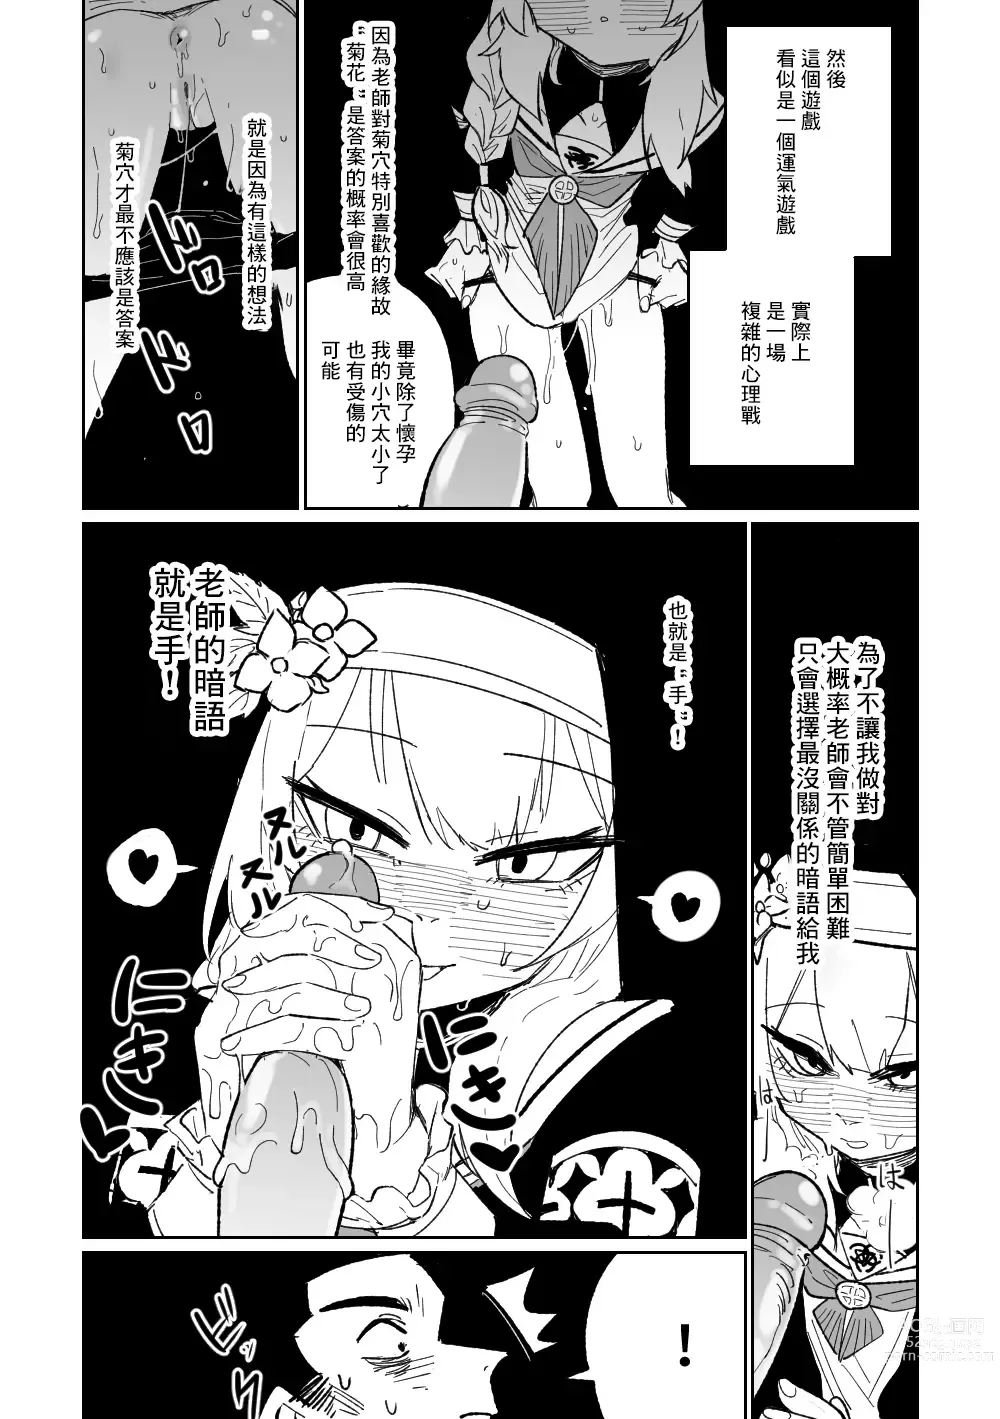 Page 4 of doujinshi Zange Game & Kakekin no Shiharai